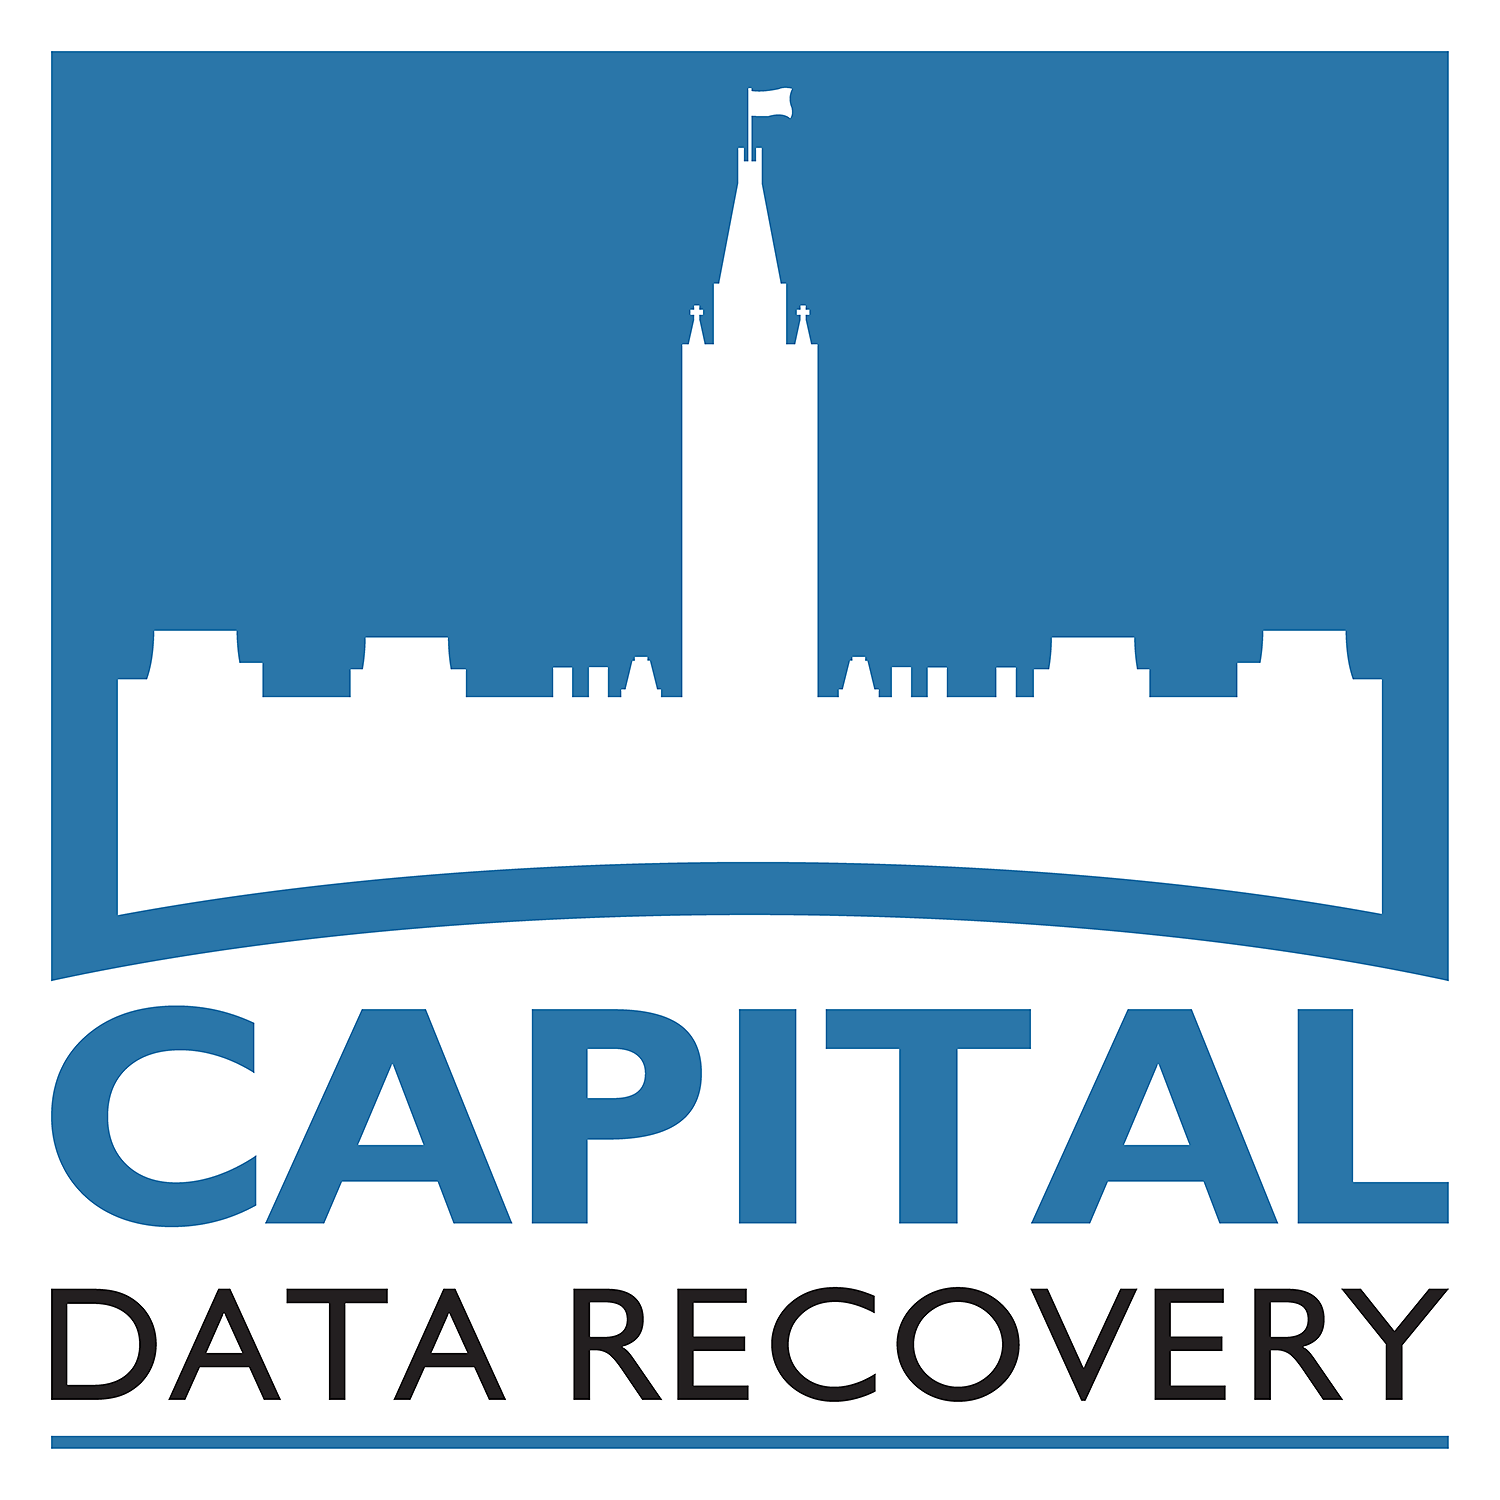 (c) Capitaldatarecovery.com